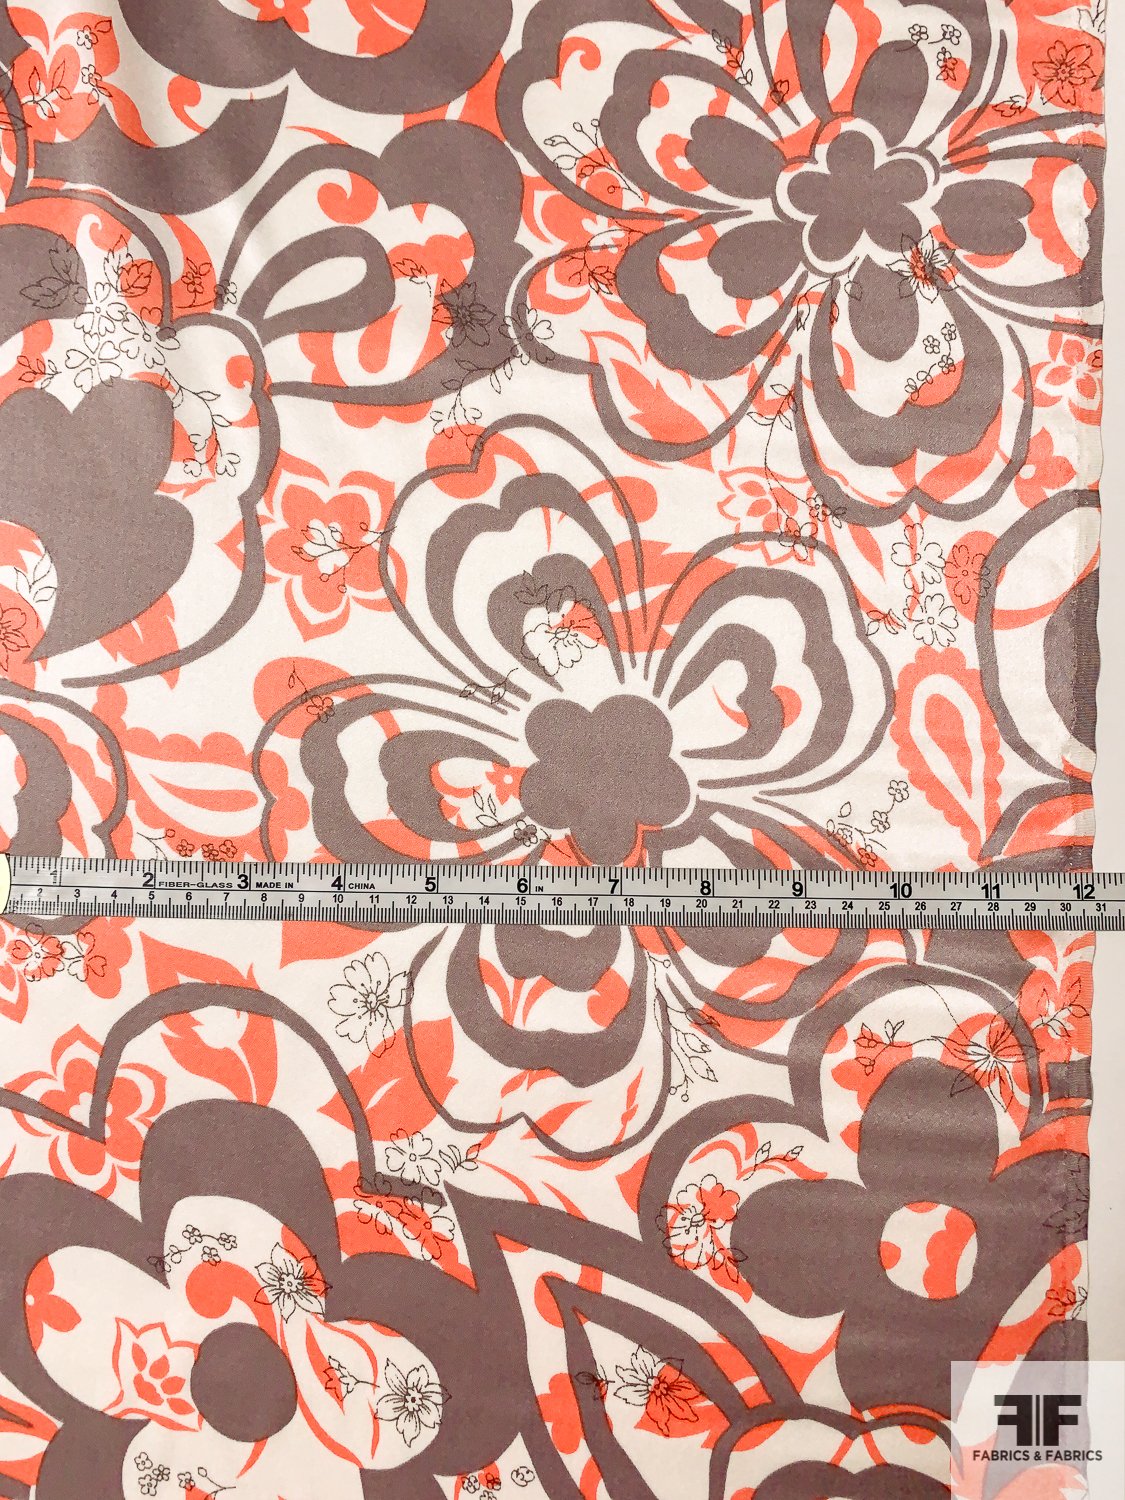 Groovy Floral Printed Silk Charmeuse - Coral / Grey-Brown / Ivory